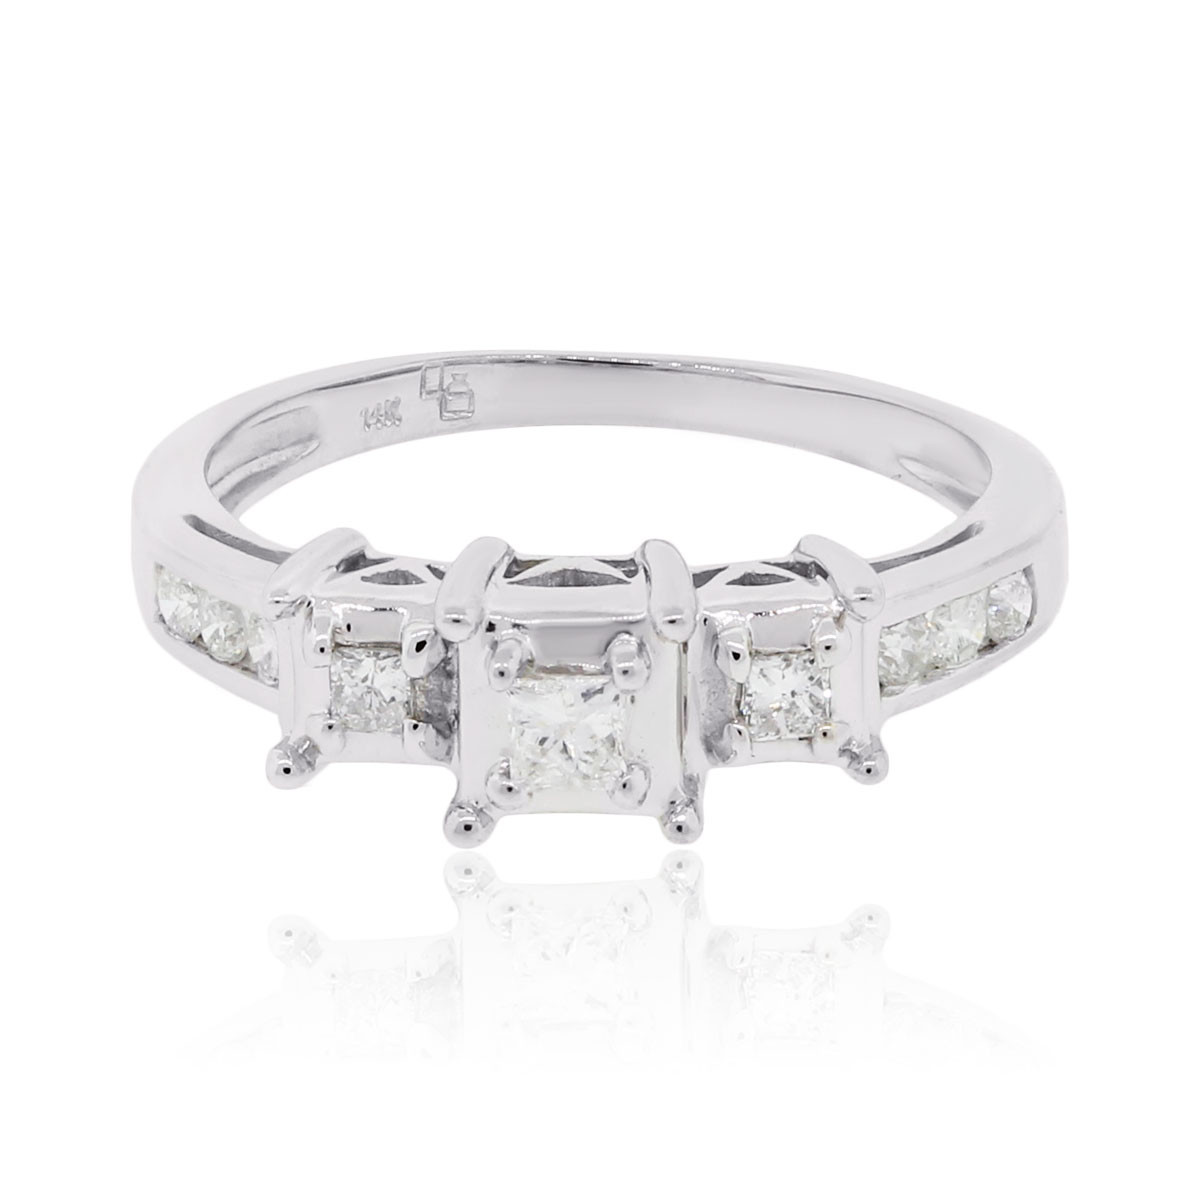 White Gold Princess Cut Engagement Ring
 14k White Gold 0 30ctw Princess Cut Diamond Engagement Ring